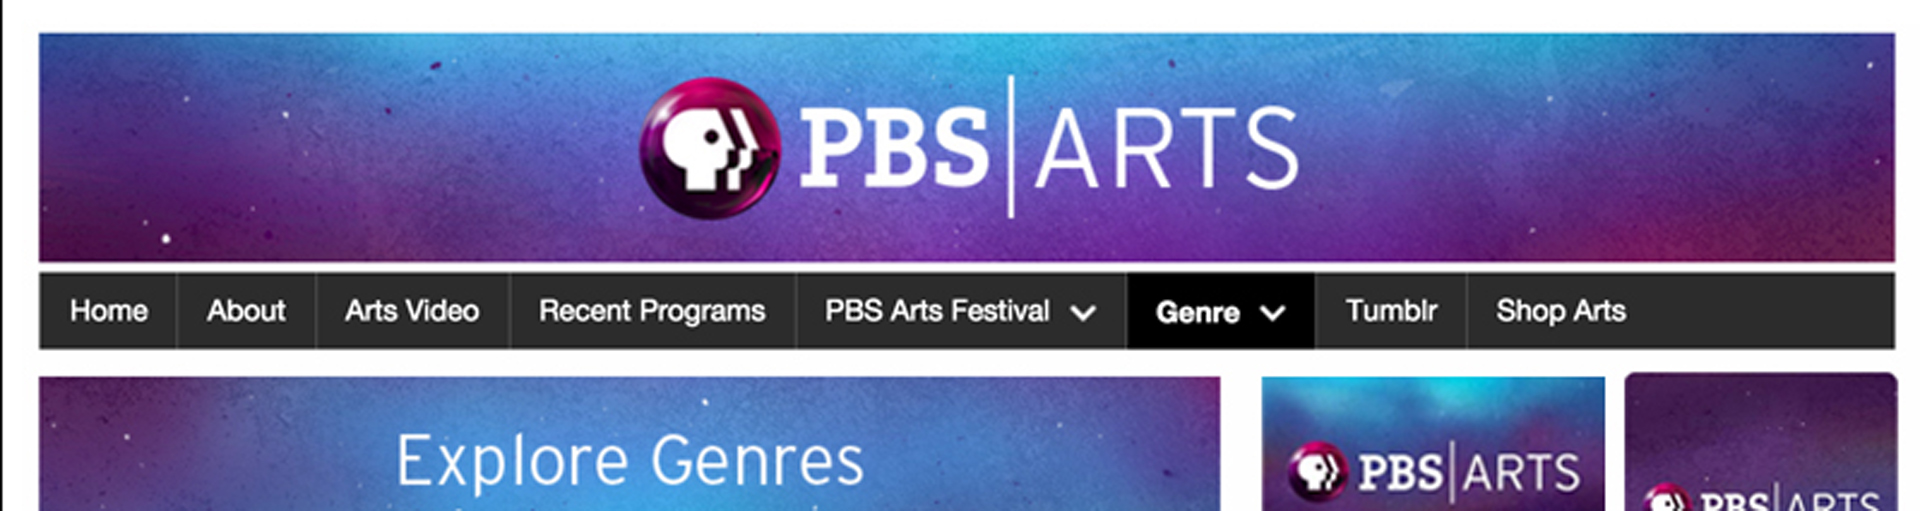 PBS Arts Refresh